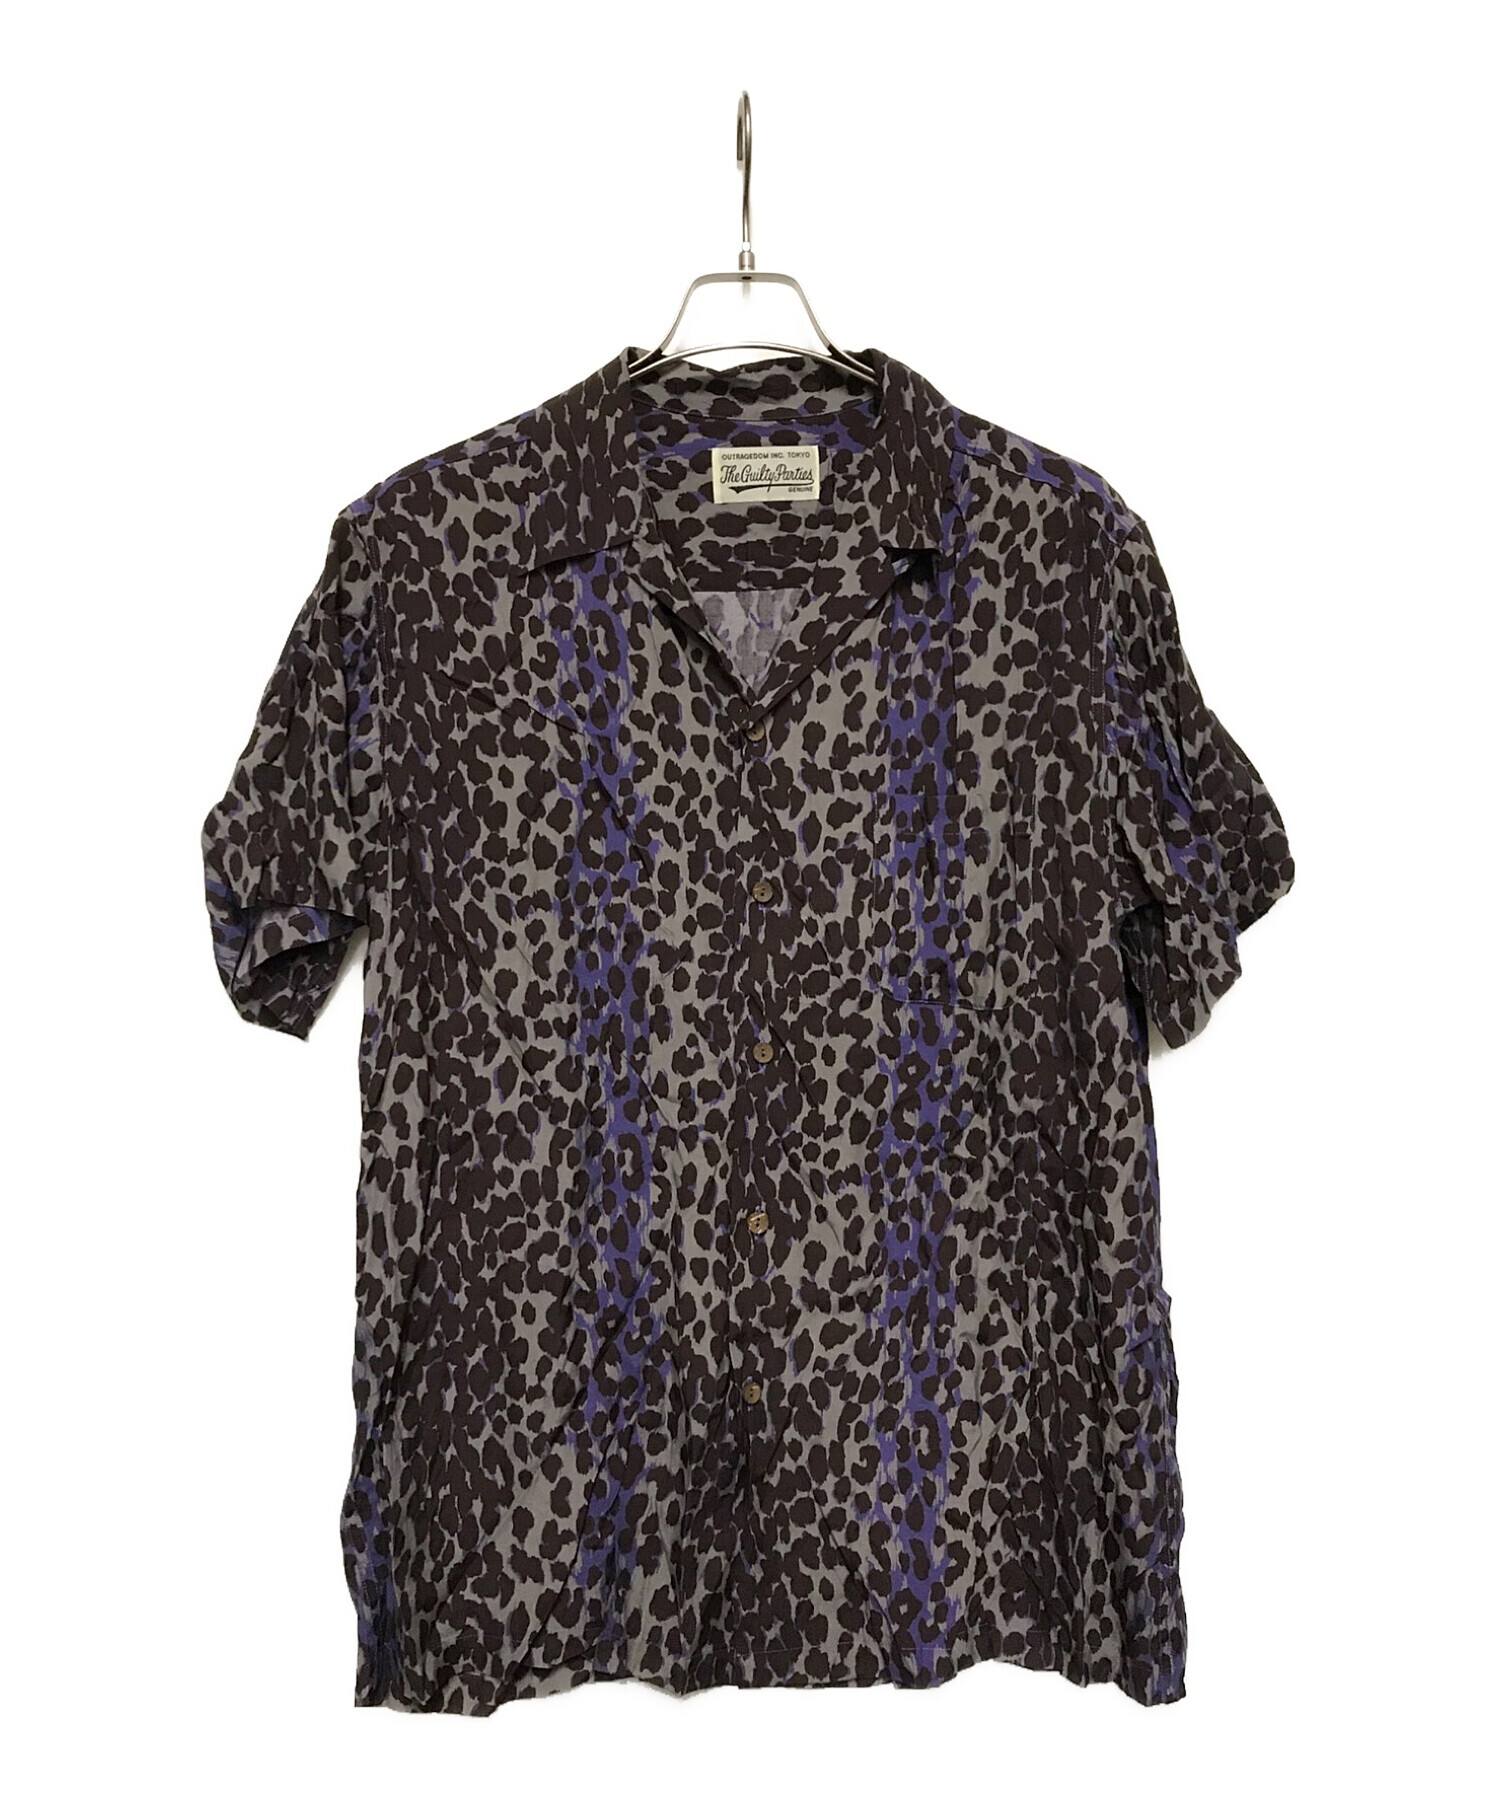 WACKO MARIA (ワコマリア) Leopard Hawaiian shirt ブラウン×パープル サイズ:L